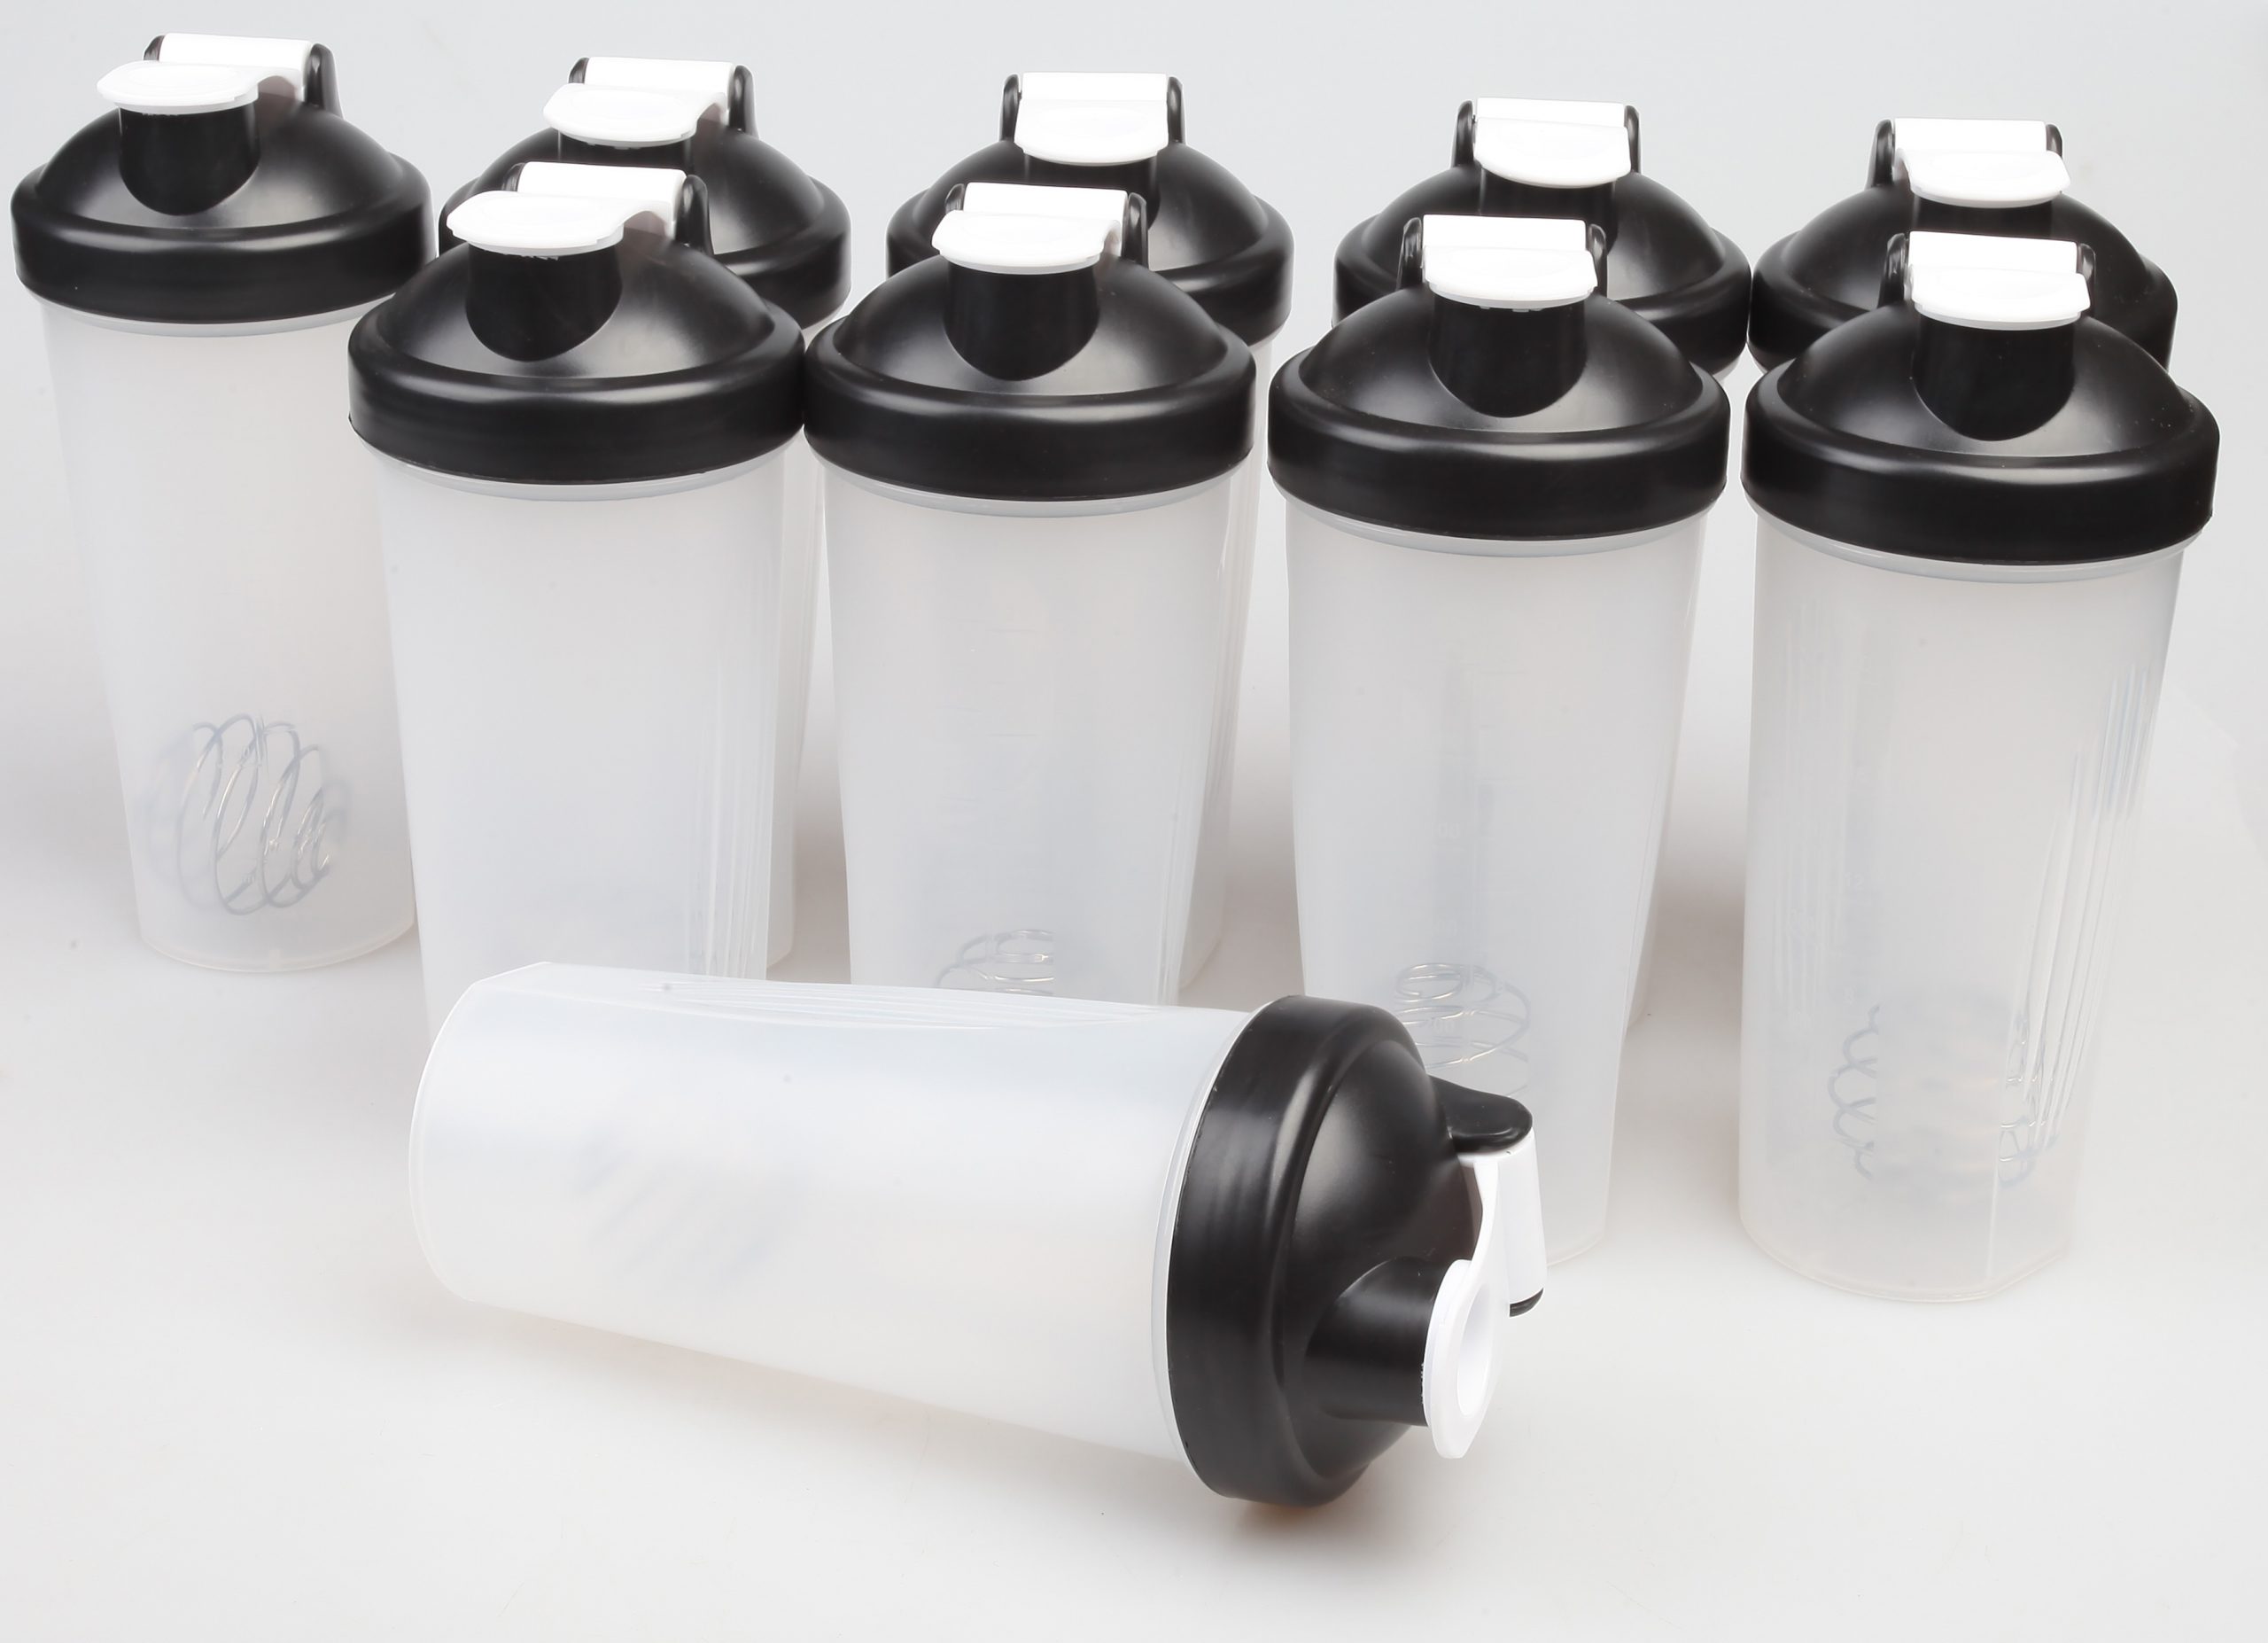 10x Shaker Bottles Protein Mixer Gym Sports Drink